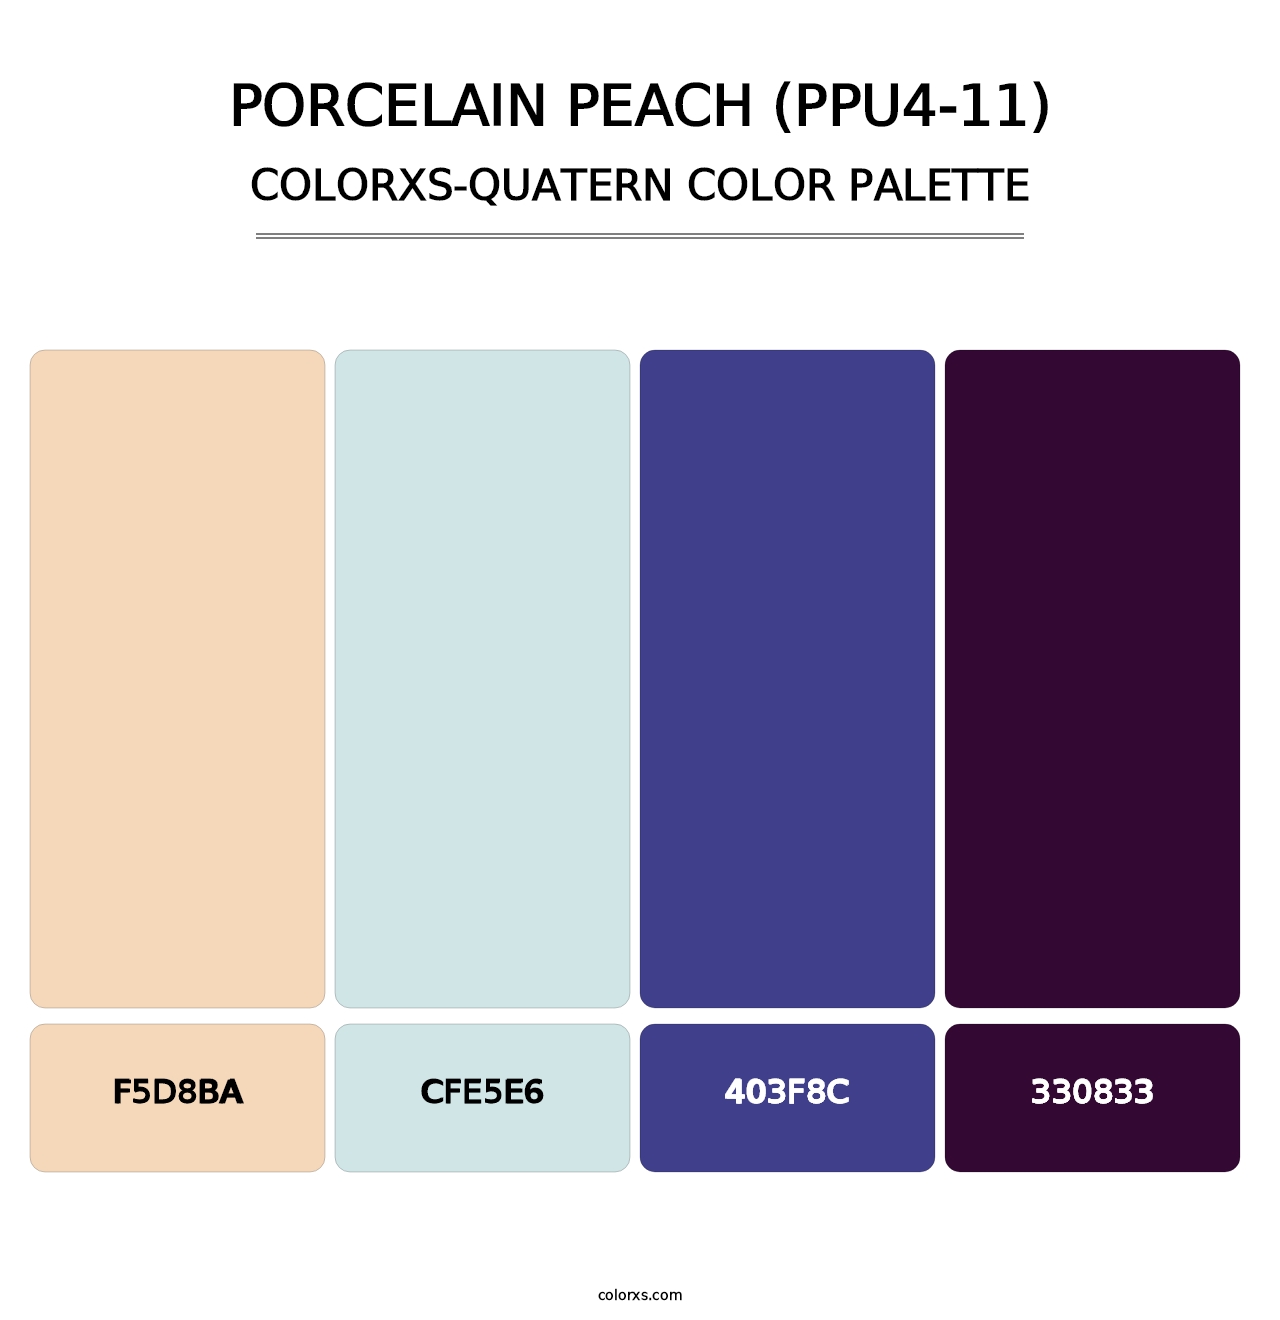 Porcelain Peach (PPU4-11) - Colorxs Quatern Palette